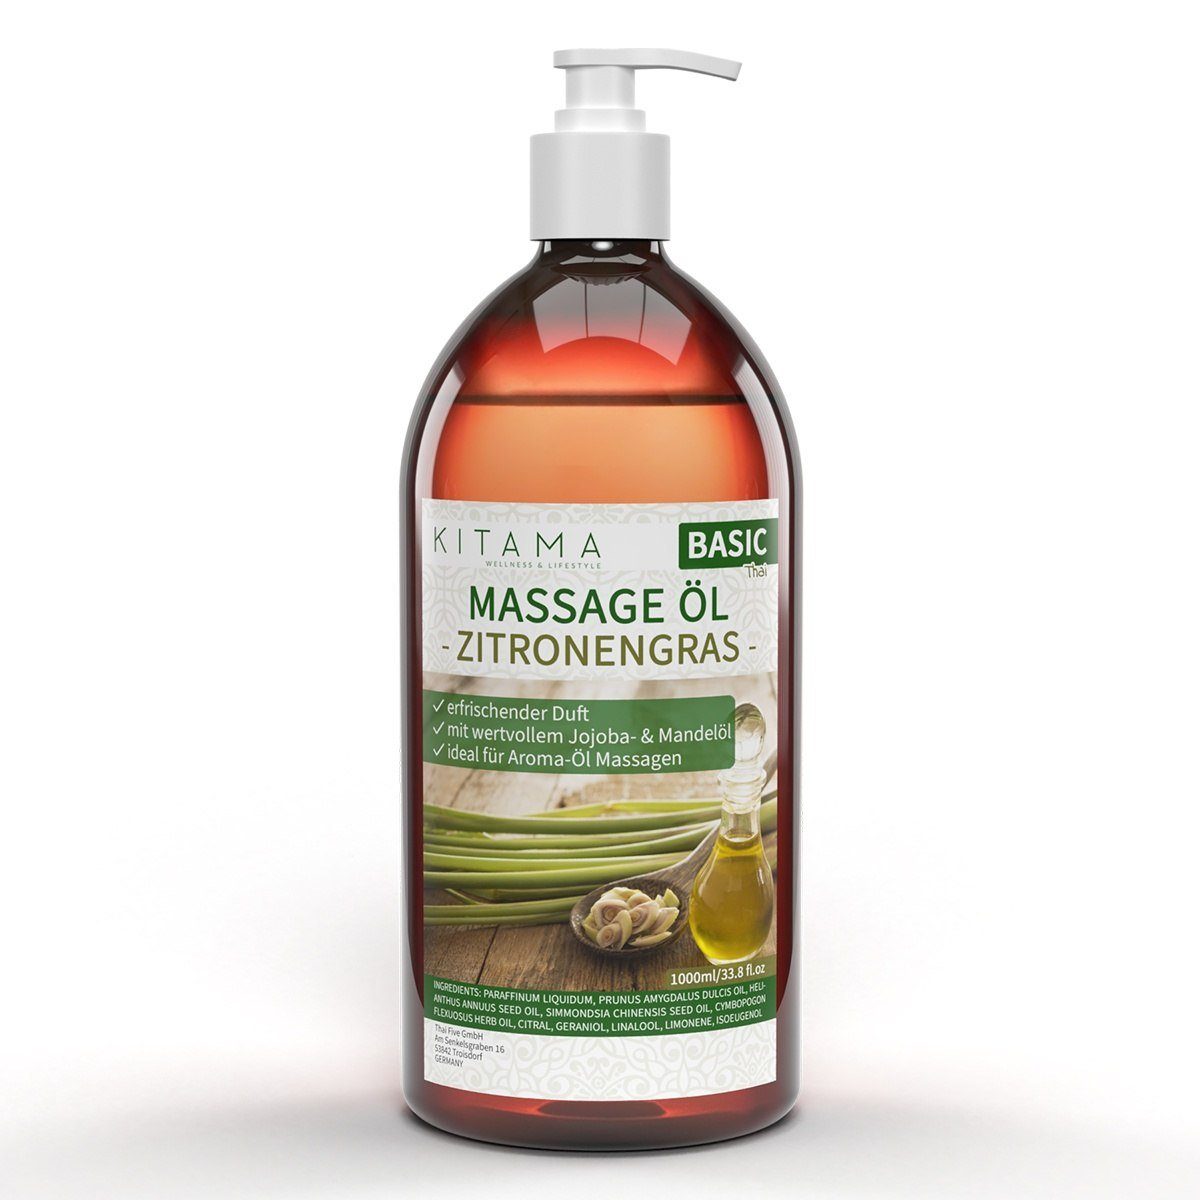 Kitama Massageöl mit Aroma - Körper-Öl für Massagen Pflegeöl Aroma-Öl Thai-Öl 1-Liter, Zitronengras